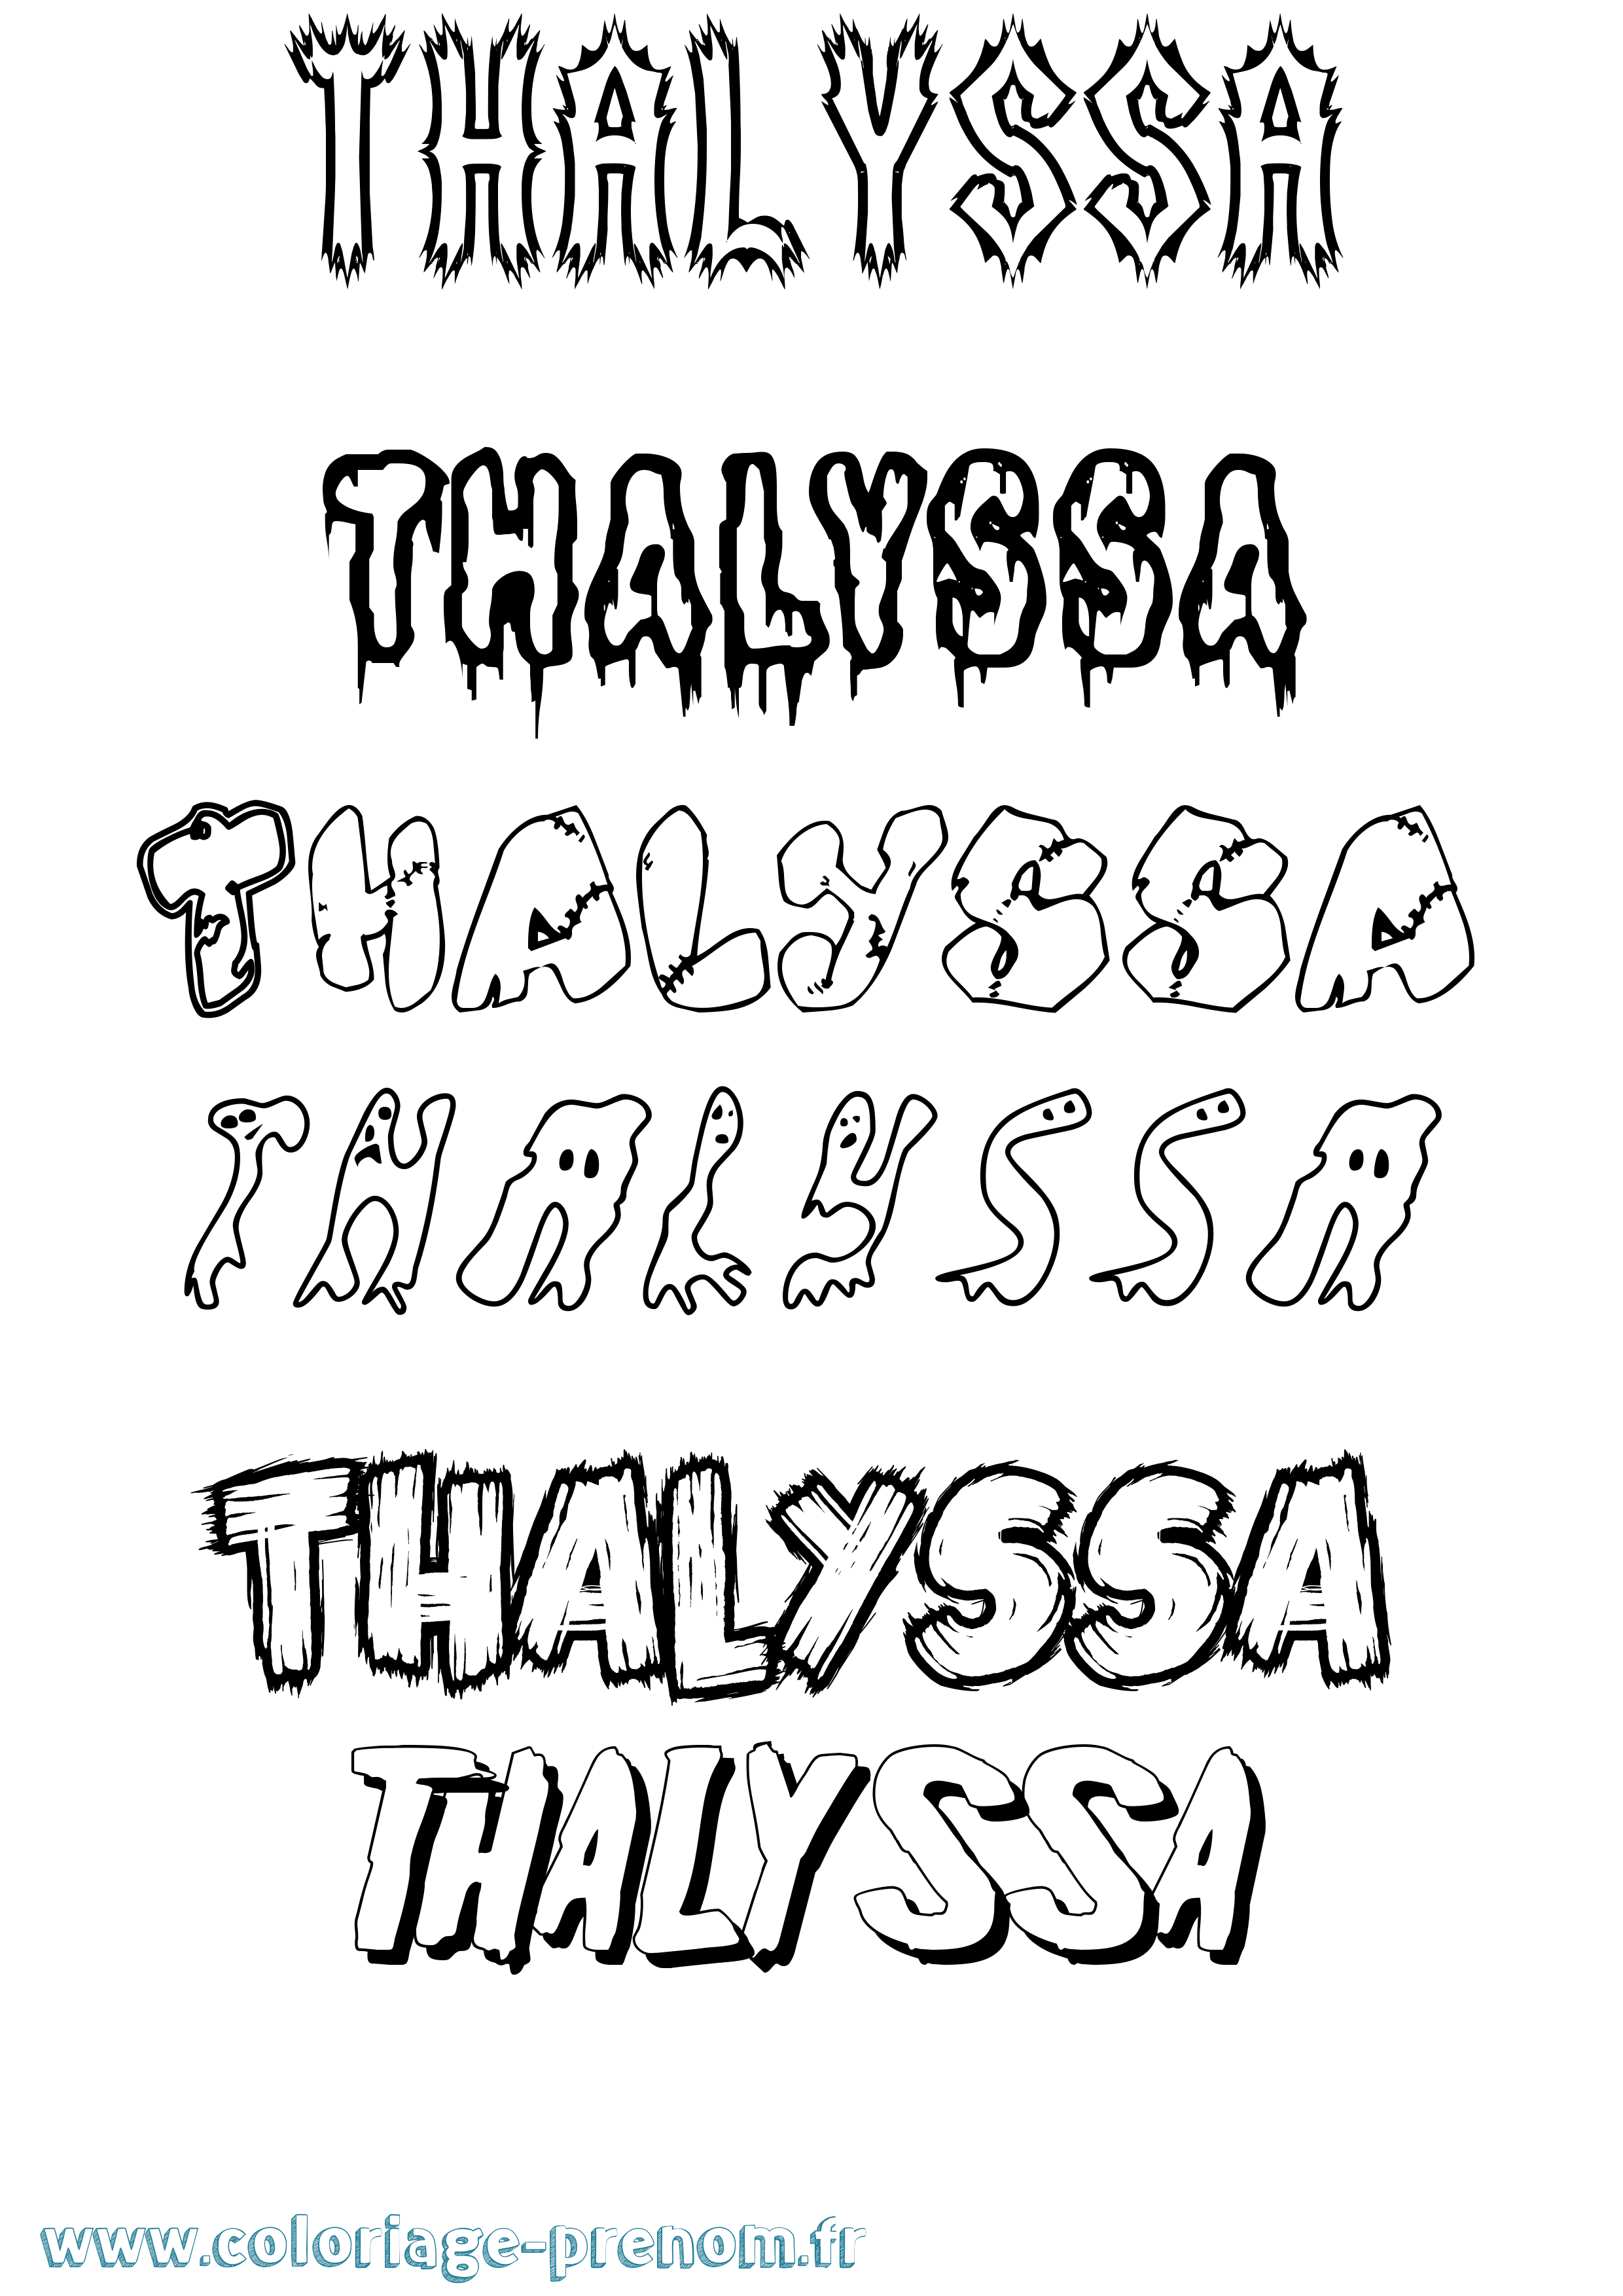 Coloriage prénom Thalyssa Frisson